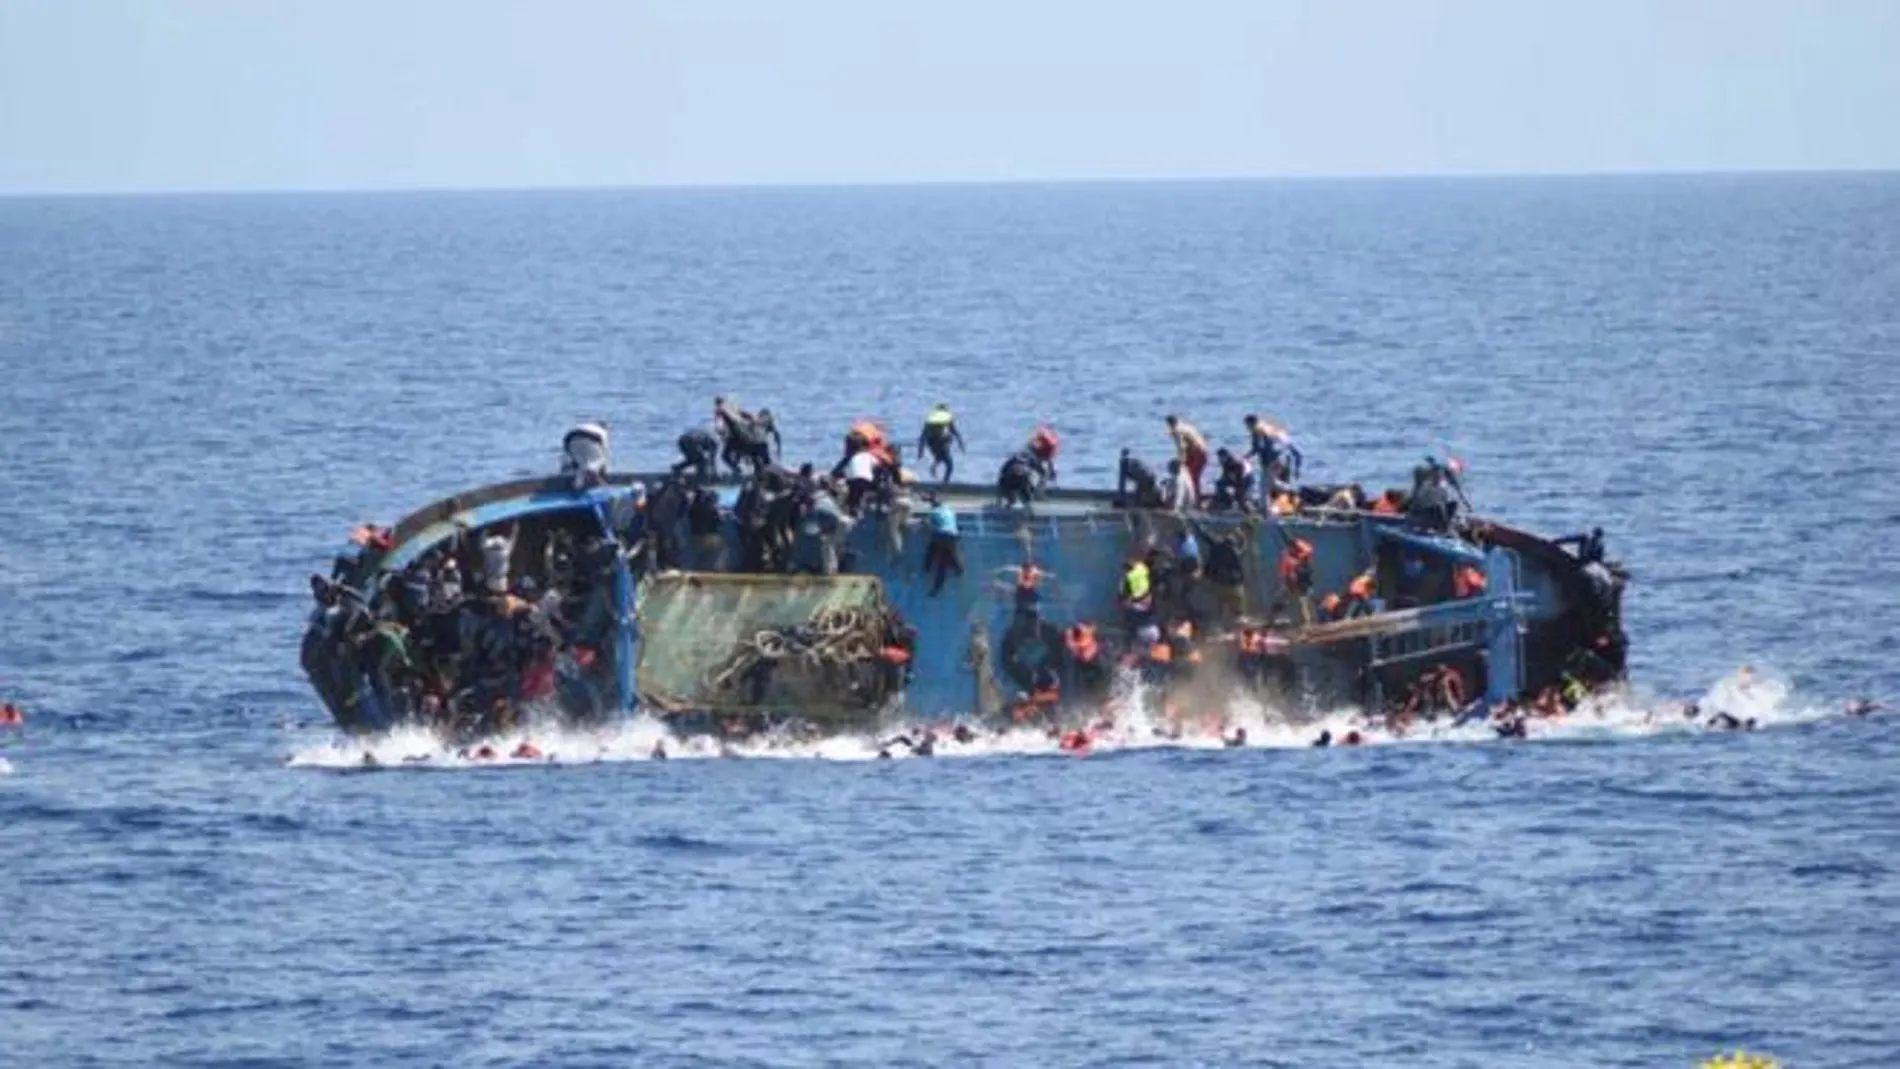 Barcaza con refugiados hundiéndose